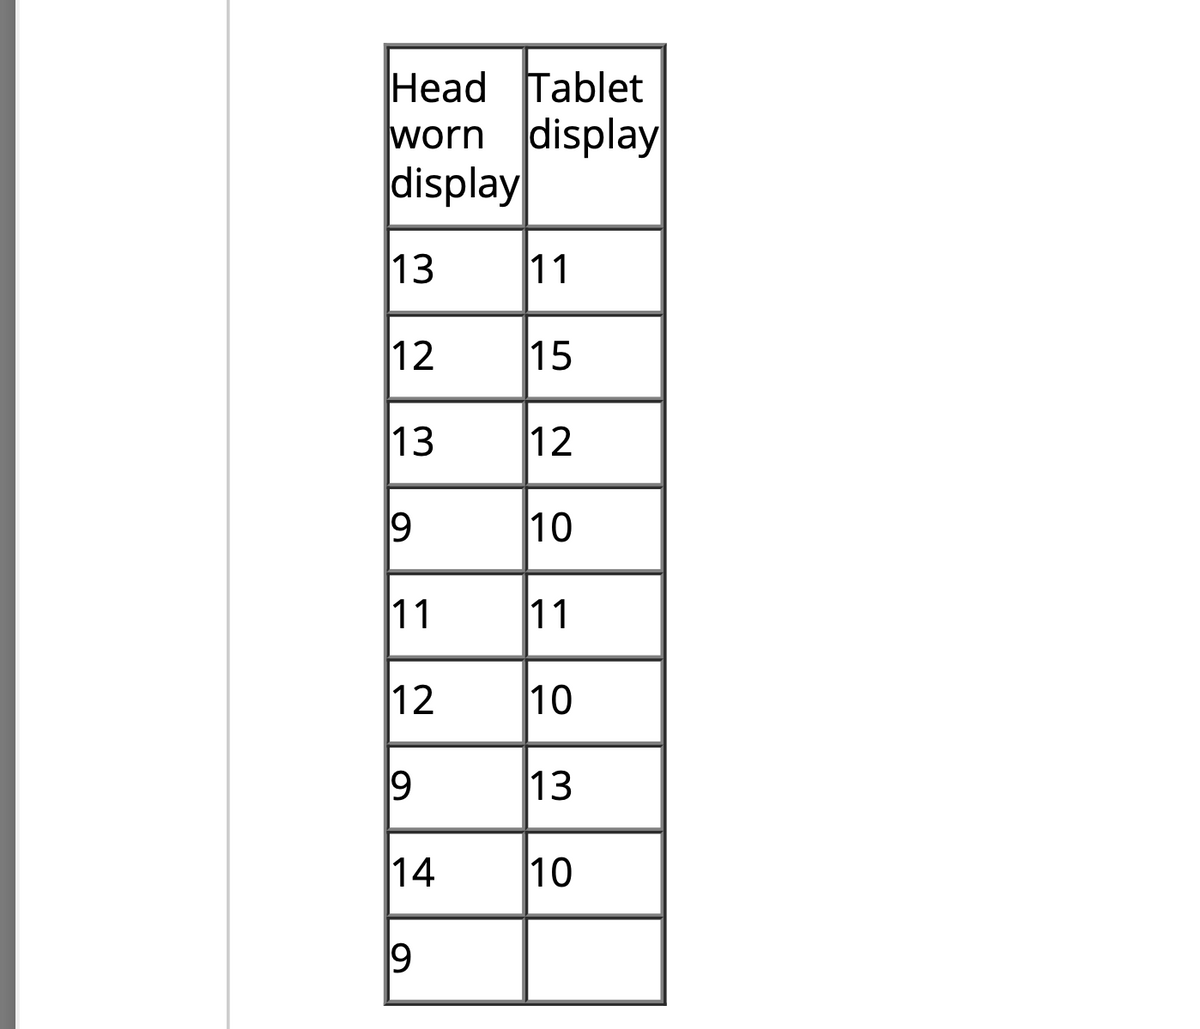 Head Tablet
worn display
display
13
12
13
9
11
12
9
14
9
11
15
12
10
11
10
13
10